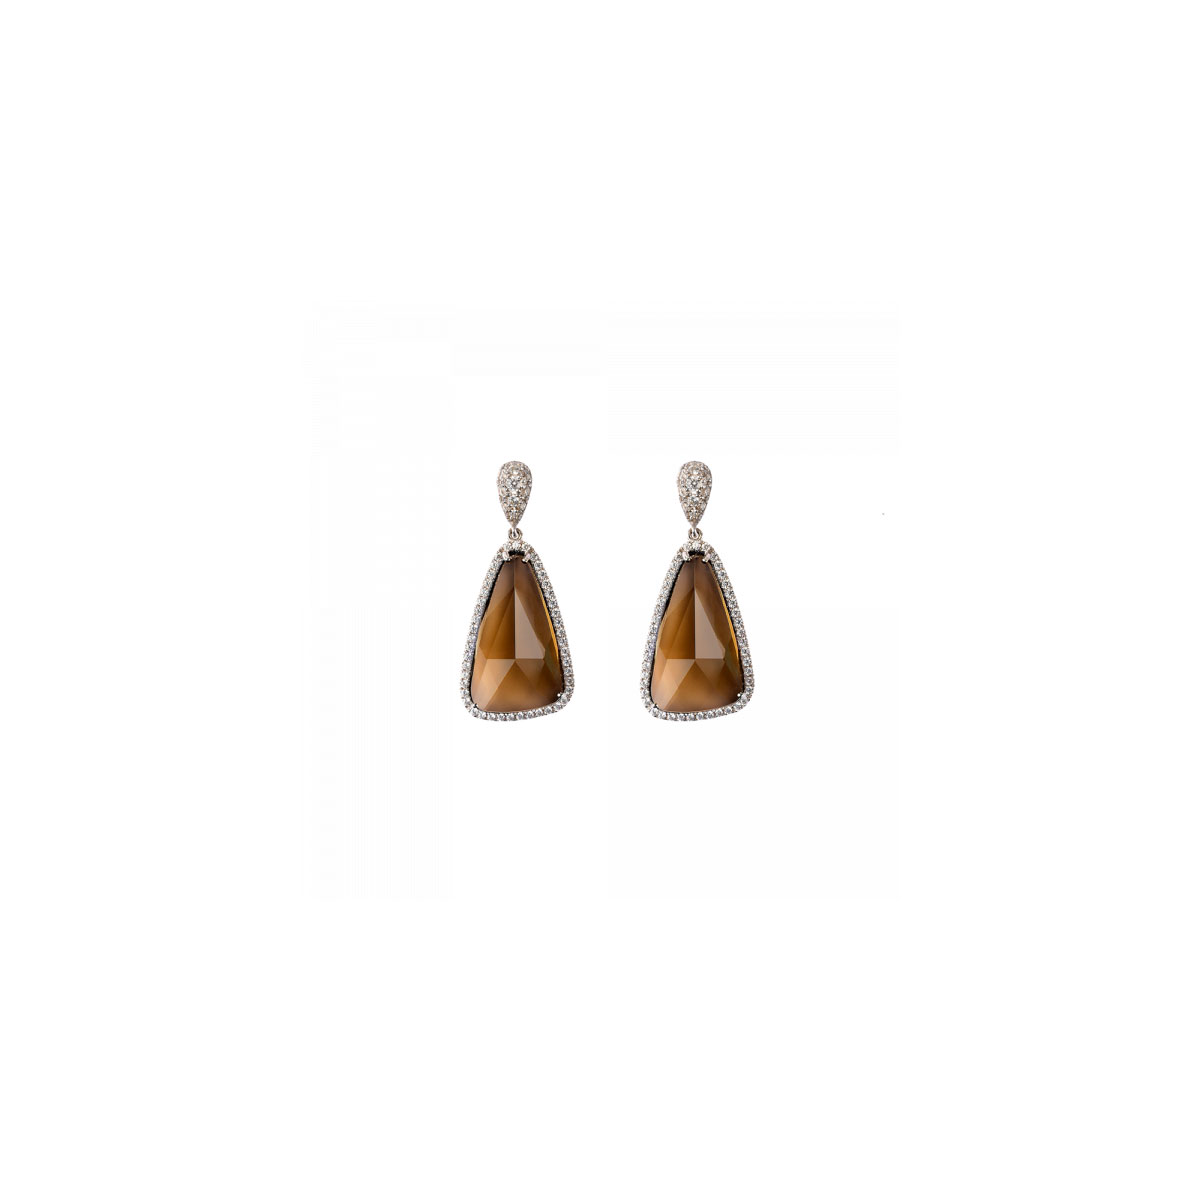 Daum Eclat de Daum Crystal Earrings in Amber